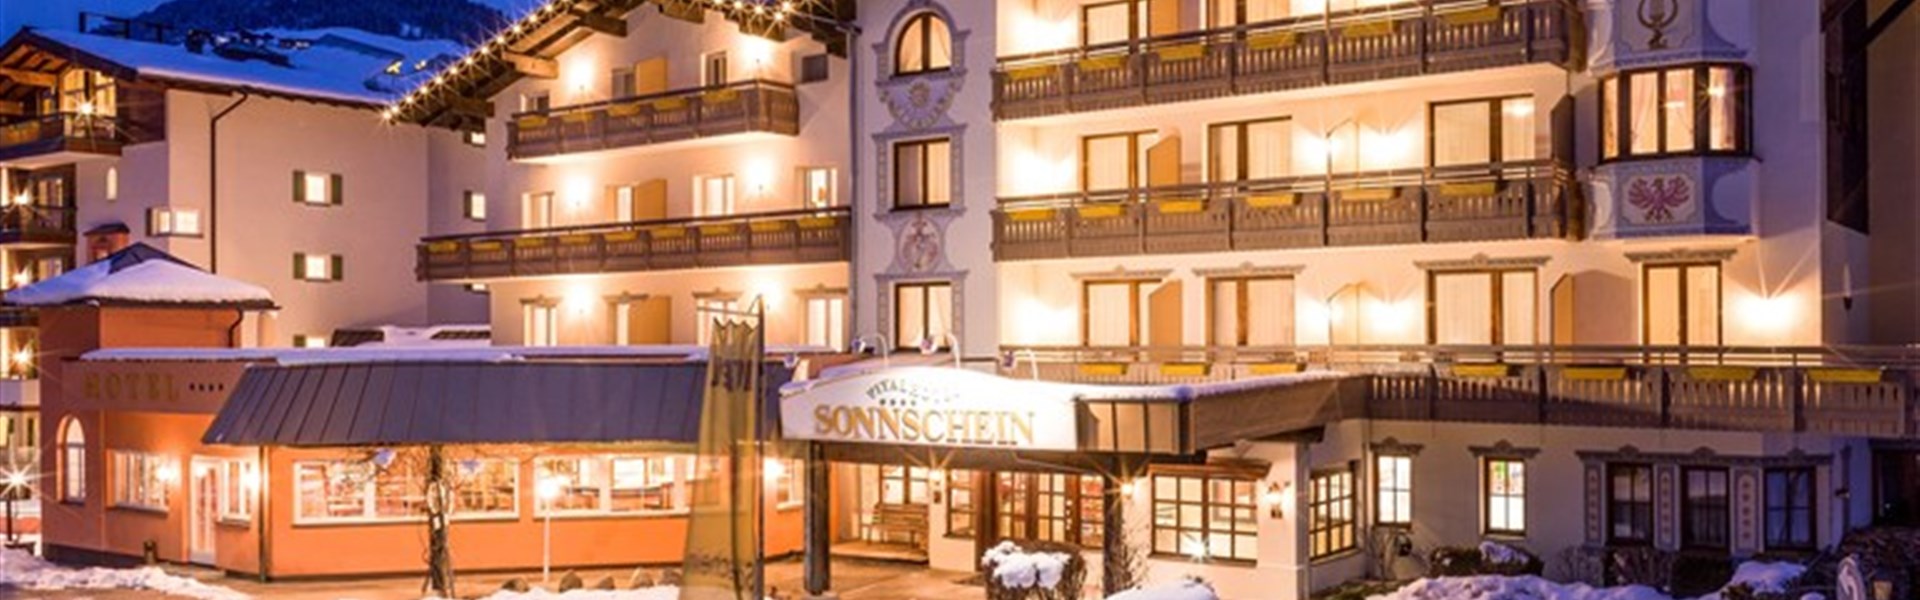 Marco Polo - Harmony Hotel Sonnschein (W) - 